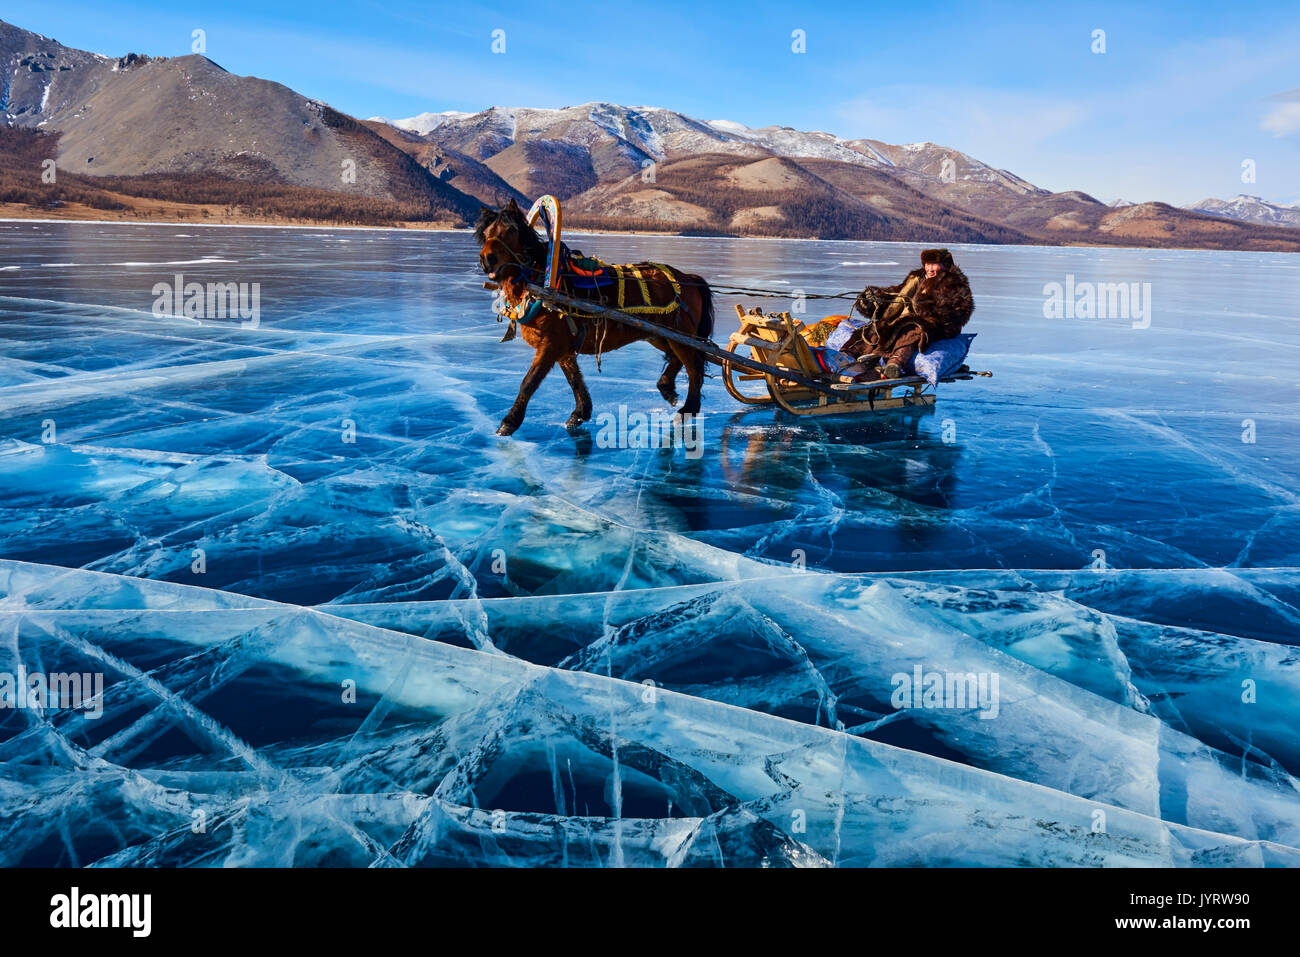 Mongolia, Khovsgol provincia, trineo de caballos en el lago congelado de Khovsgol en invierno Foto de stock